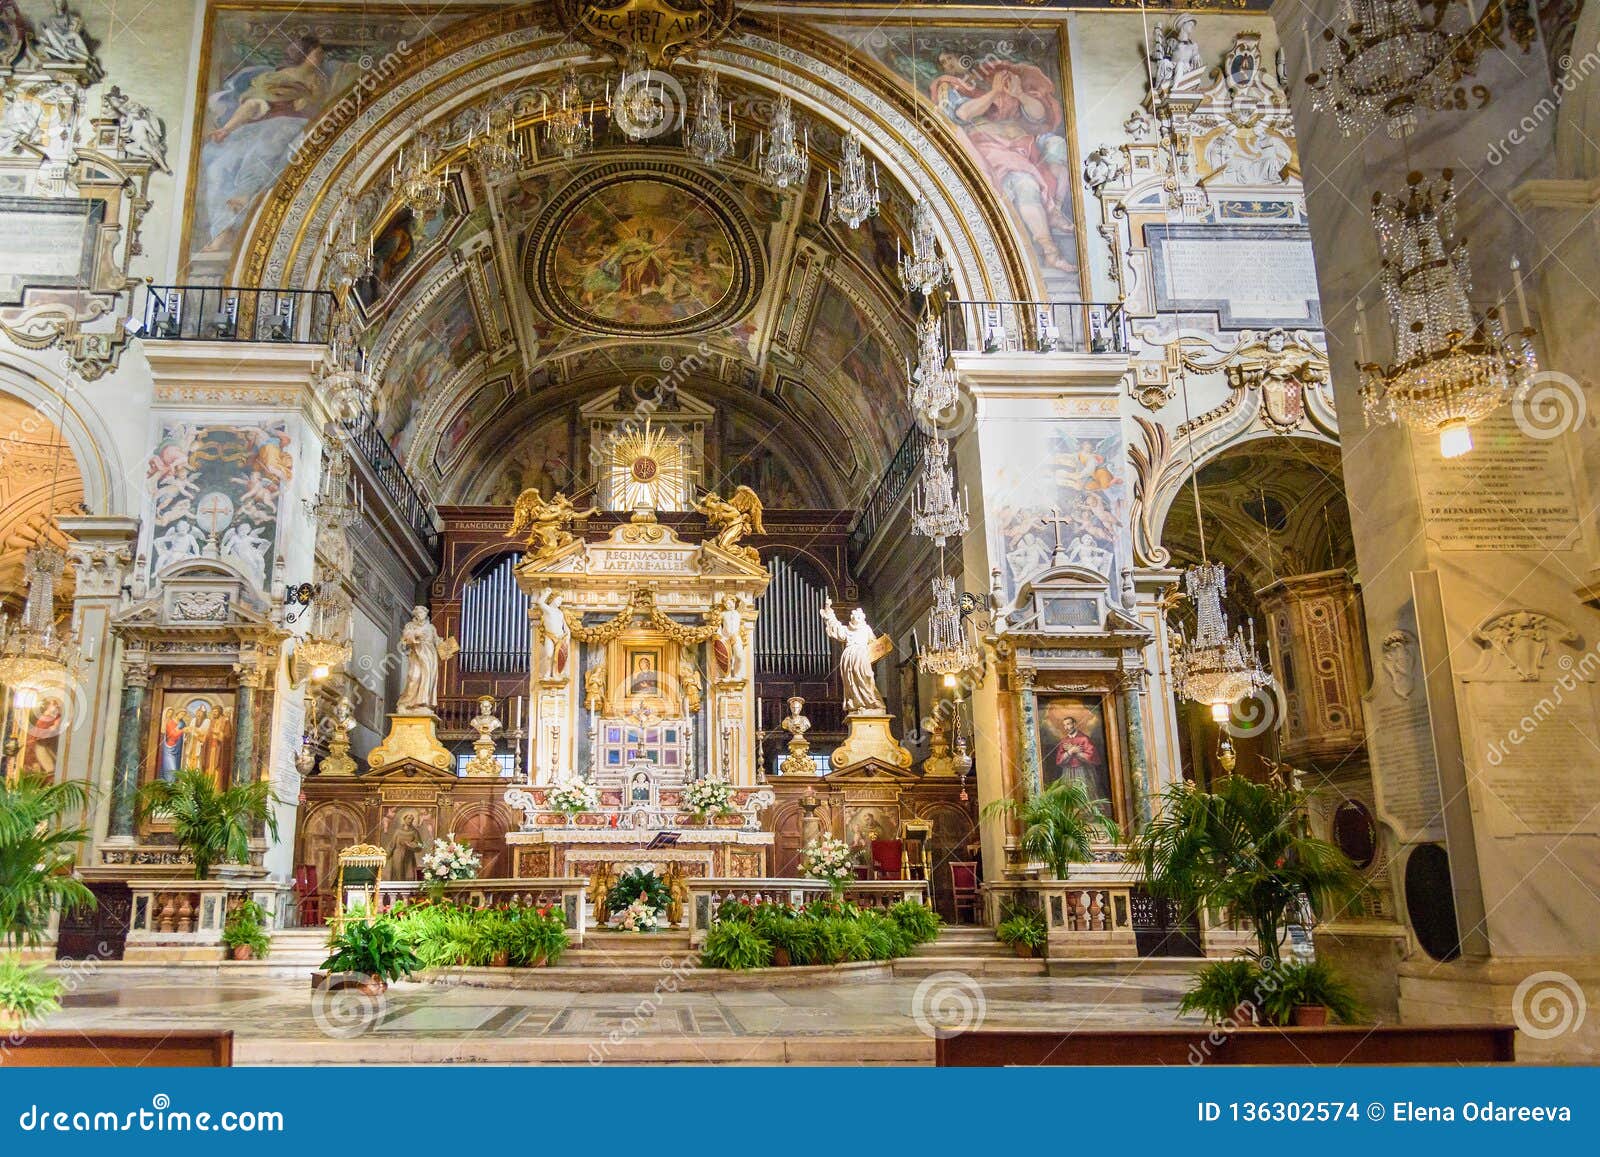 Interior of Basilica Di Santa Maria in Rome. Italy Editorial Stock Image - Image of roma: 136302574